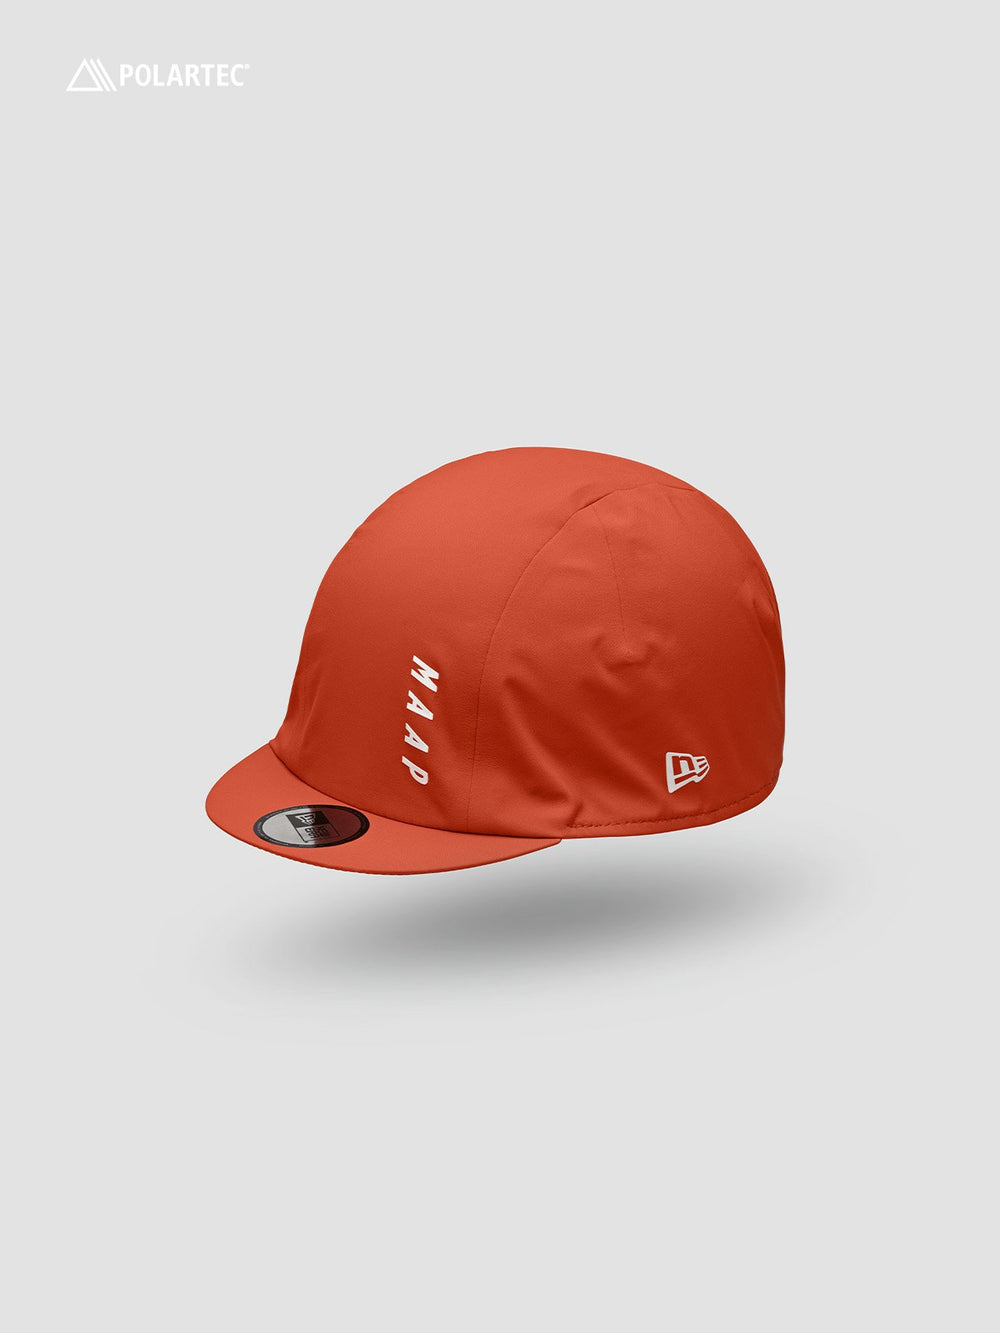 Product Image for Prime New Era Cap